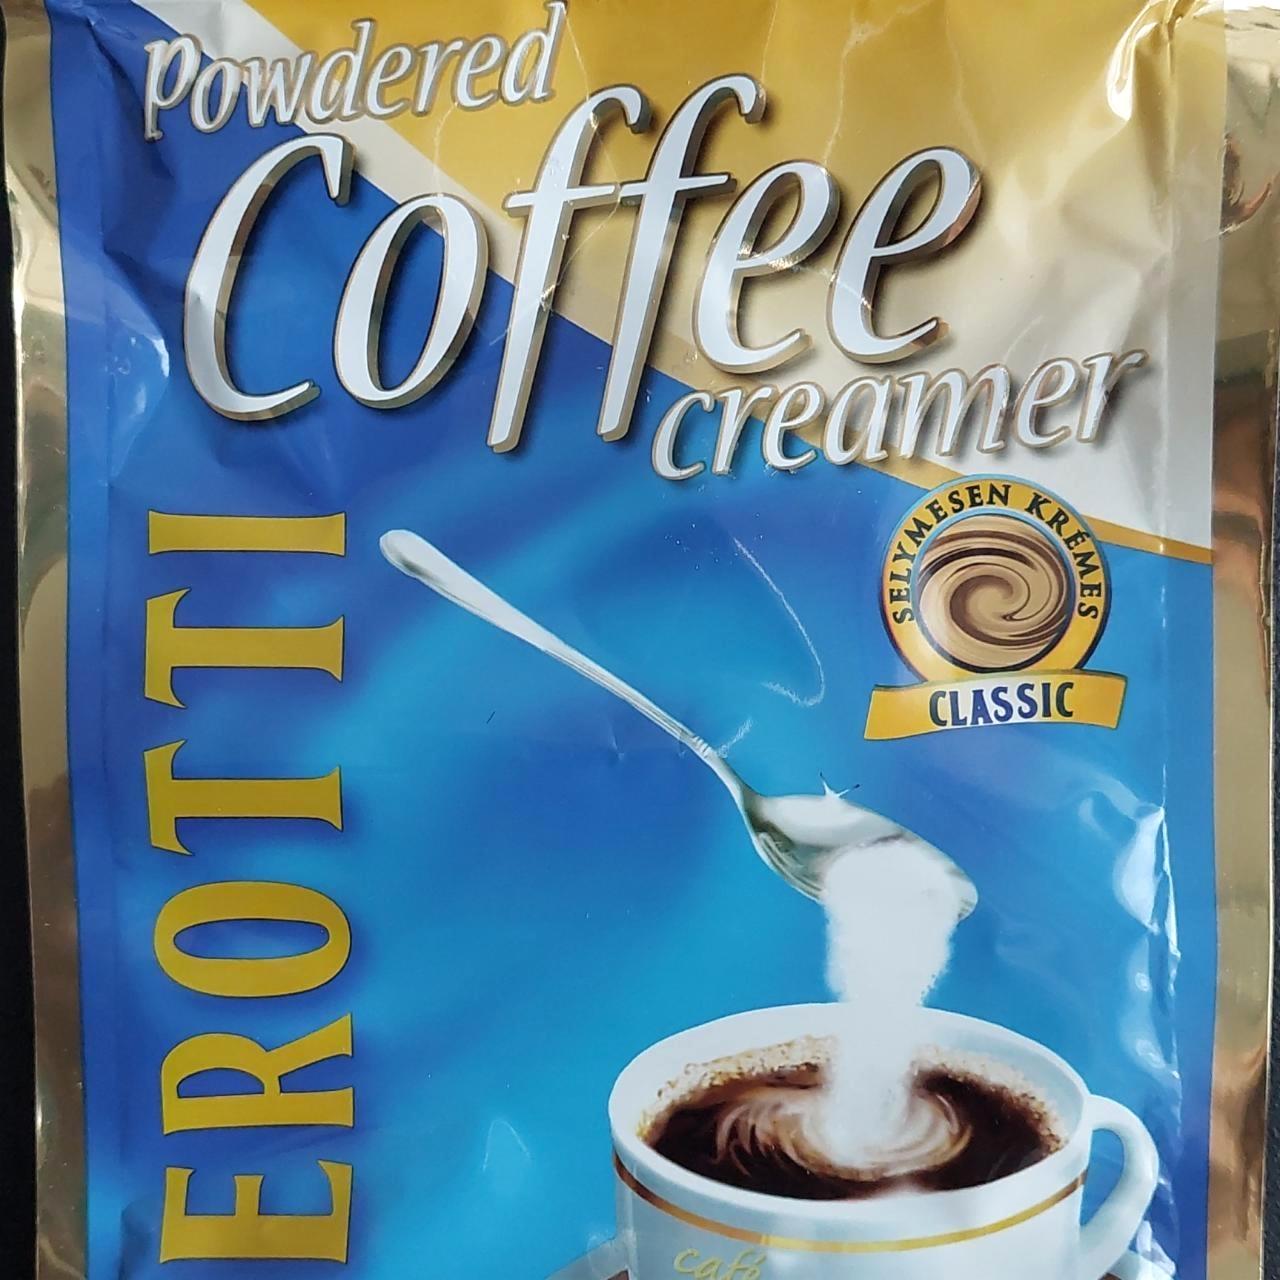 Képek - Powdered coffee creamer Perotti